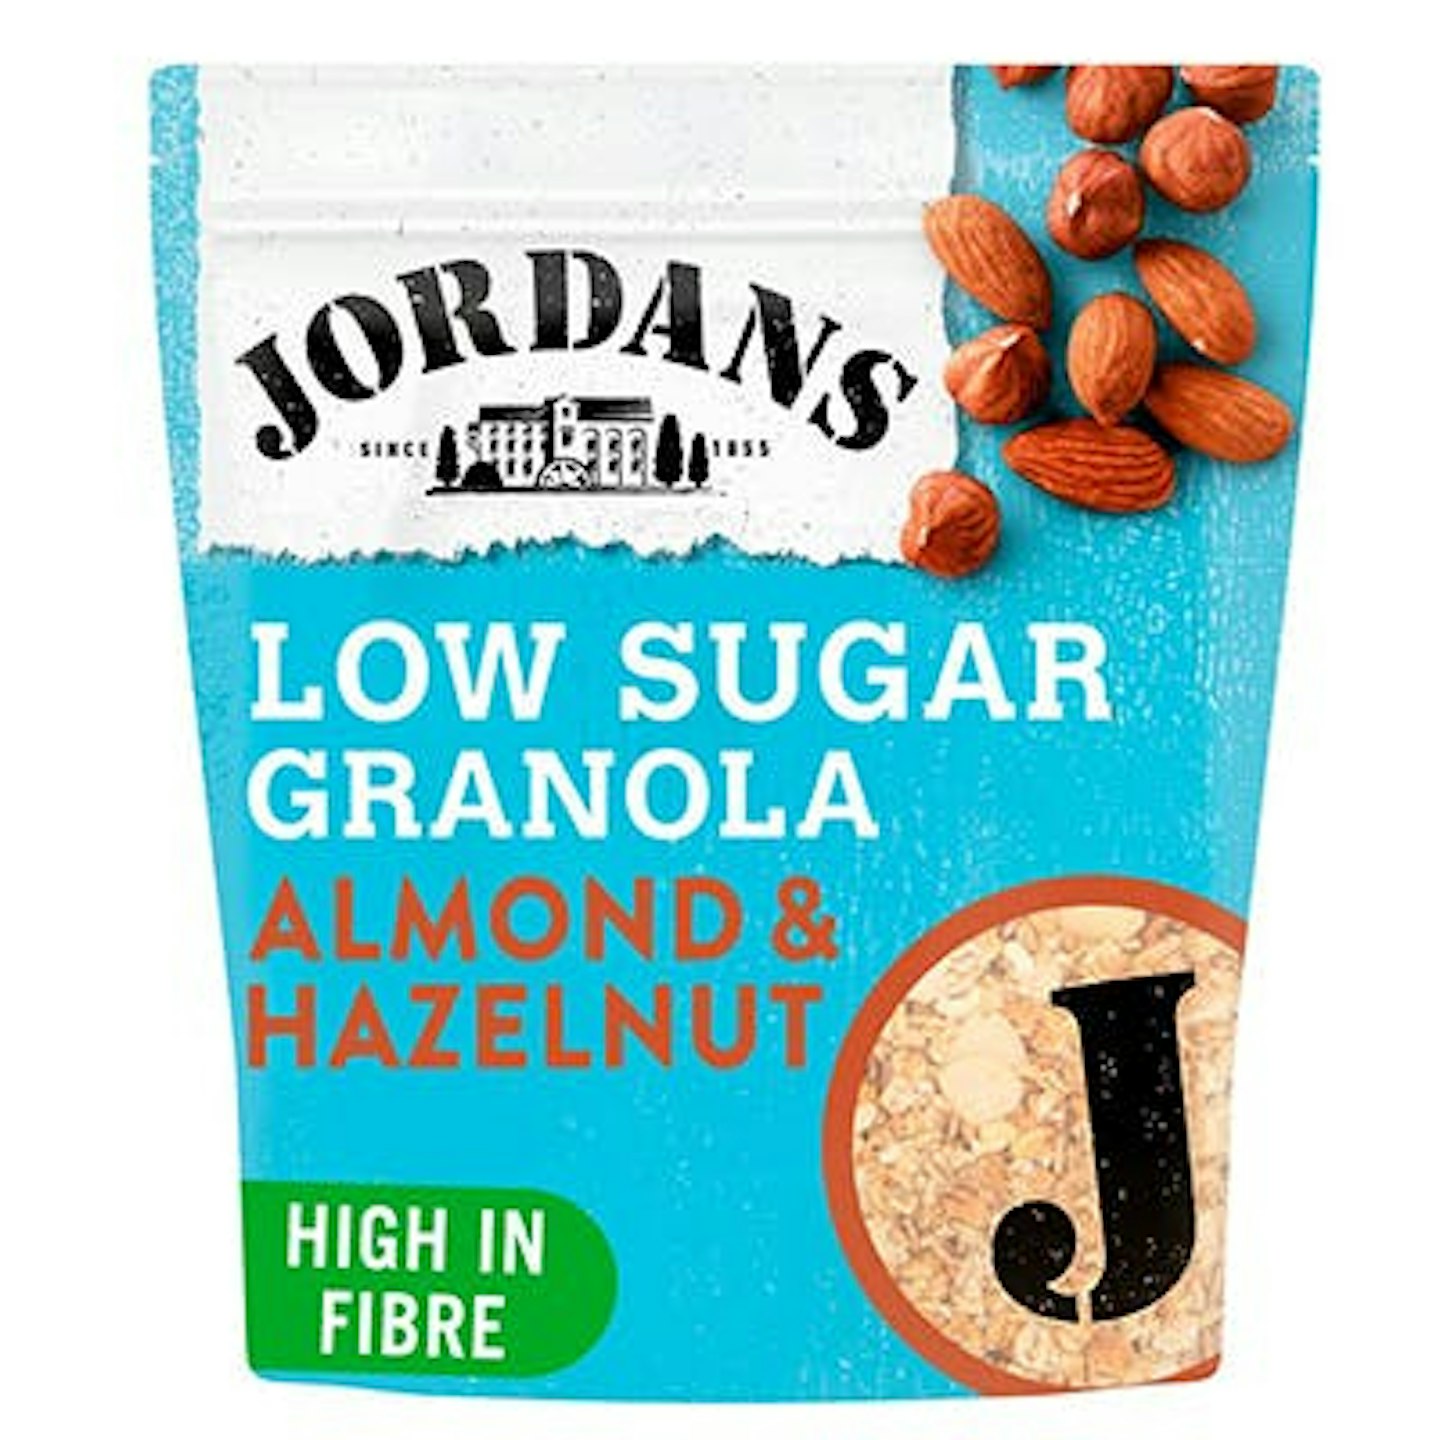 Jordan's Low Sugar Nut Granola